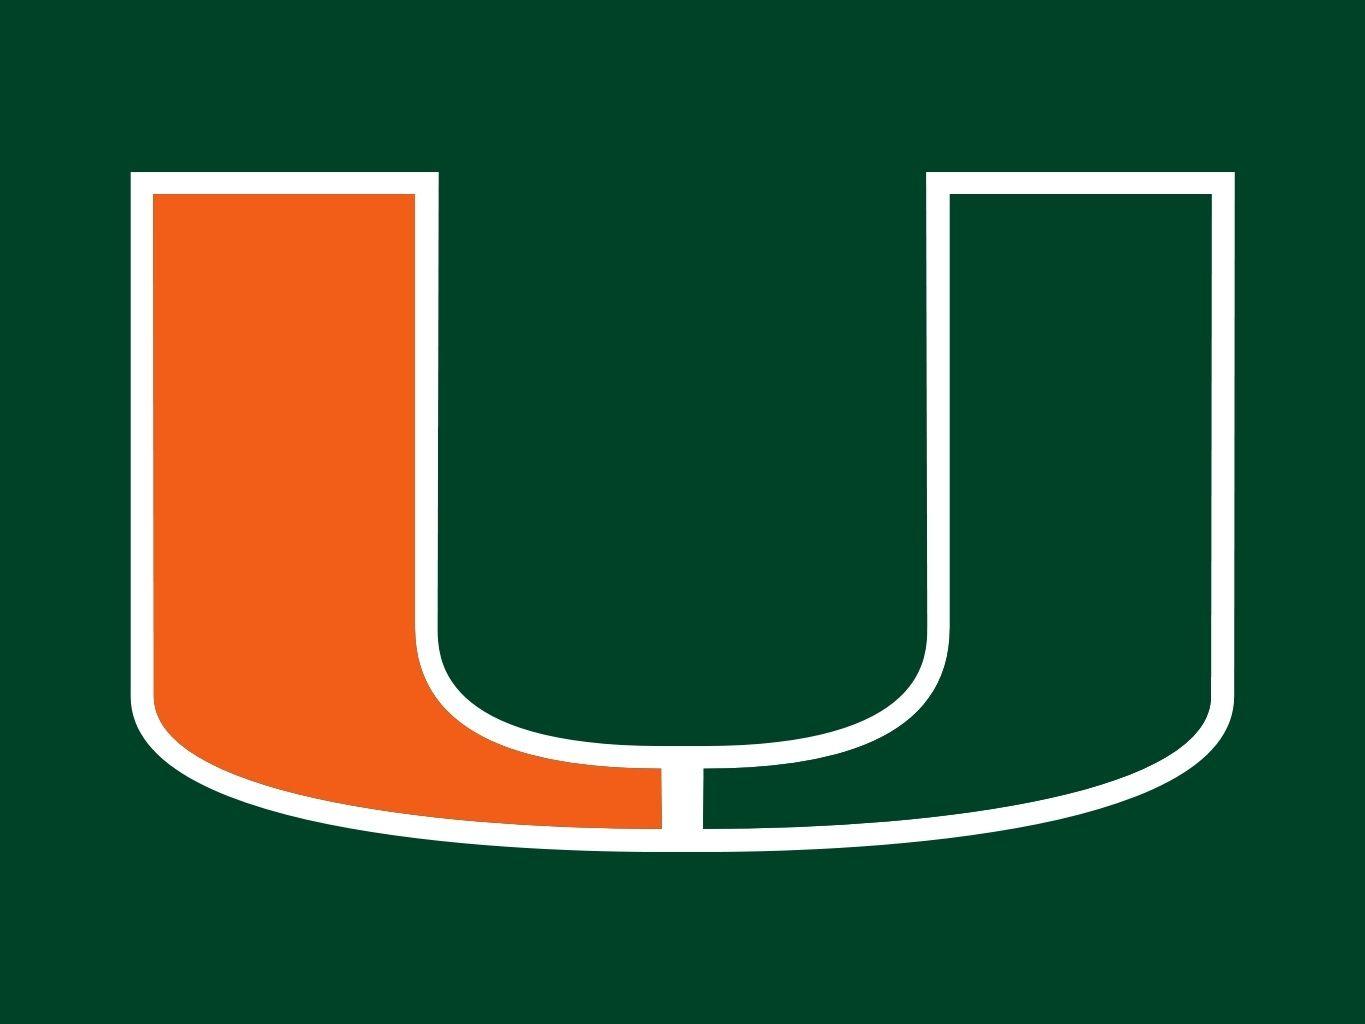 University of Miami Hurricanes Logo - University of Miami Hurricanes | Go Canes | Miami hurricanes, Miami ...